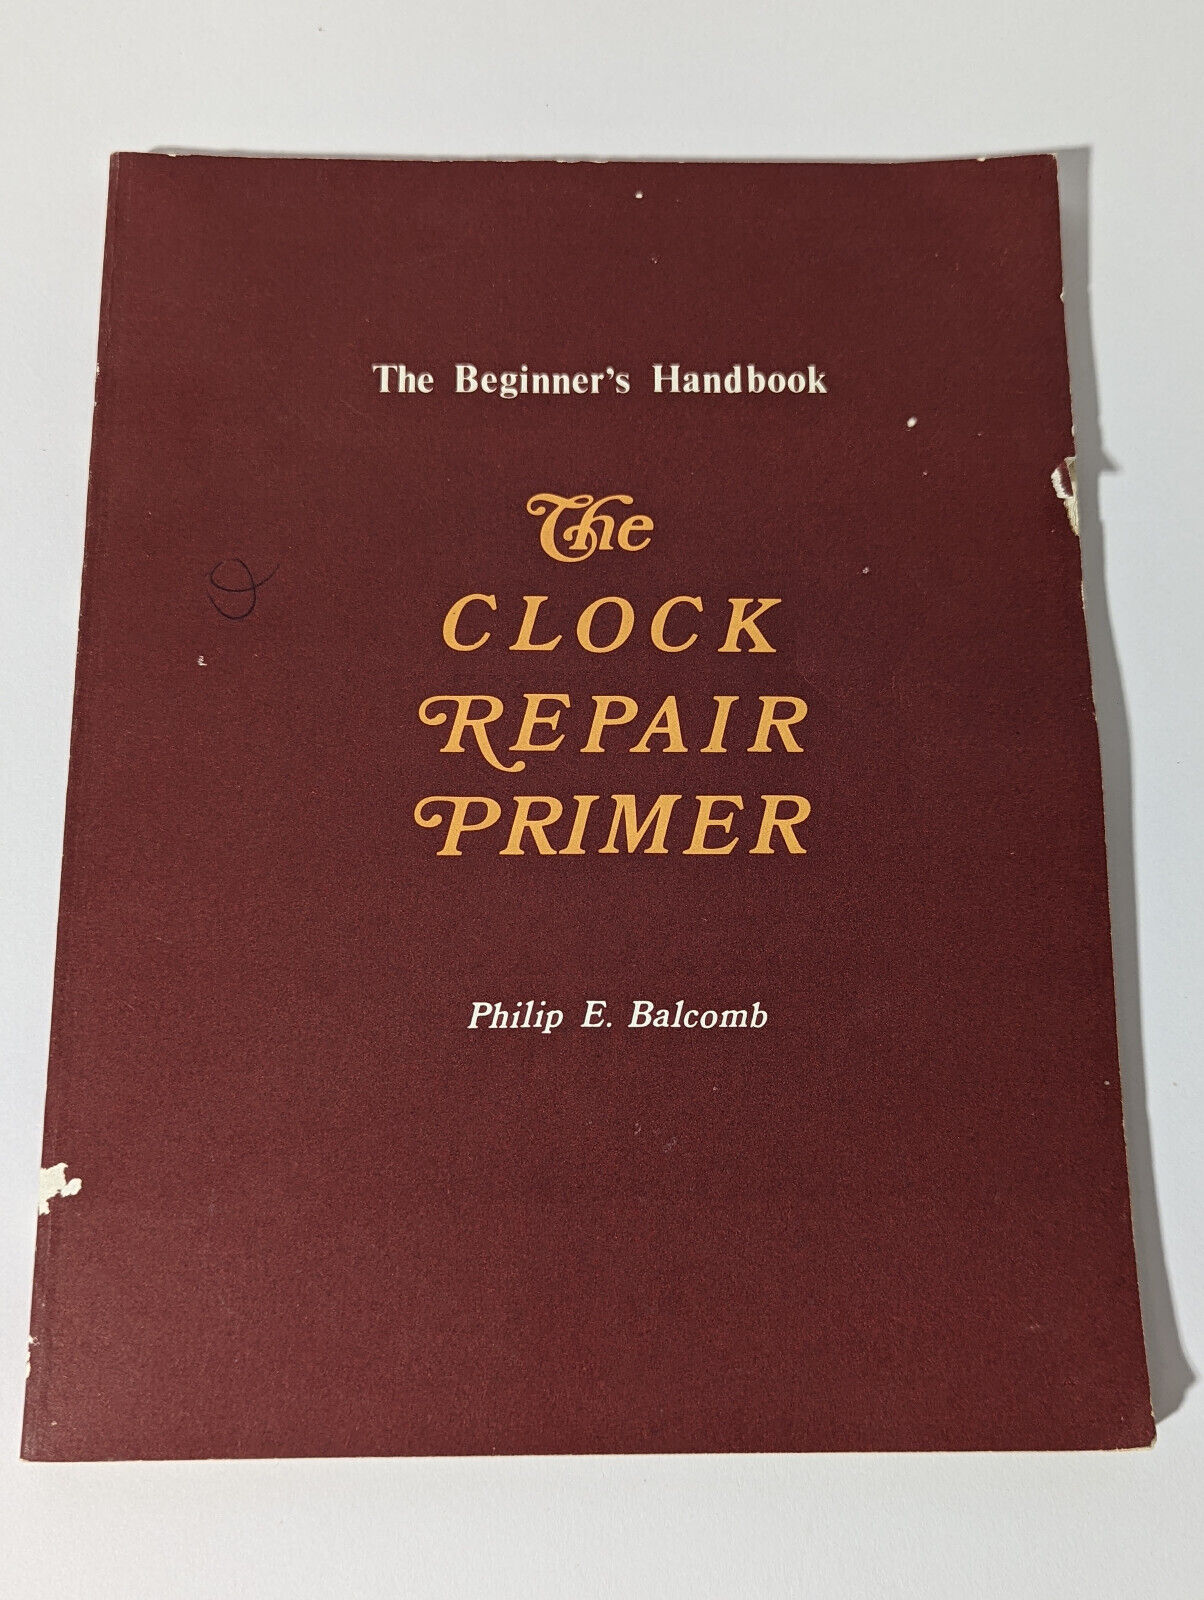 The Clock Repair Primer Begineer's Handbook 1986 Philip E. Balcomb